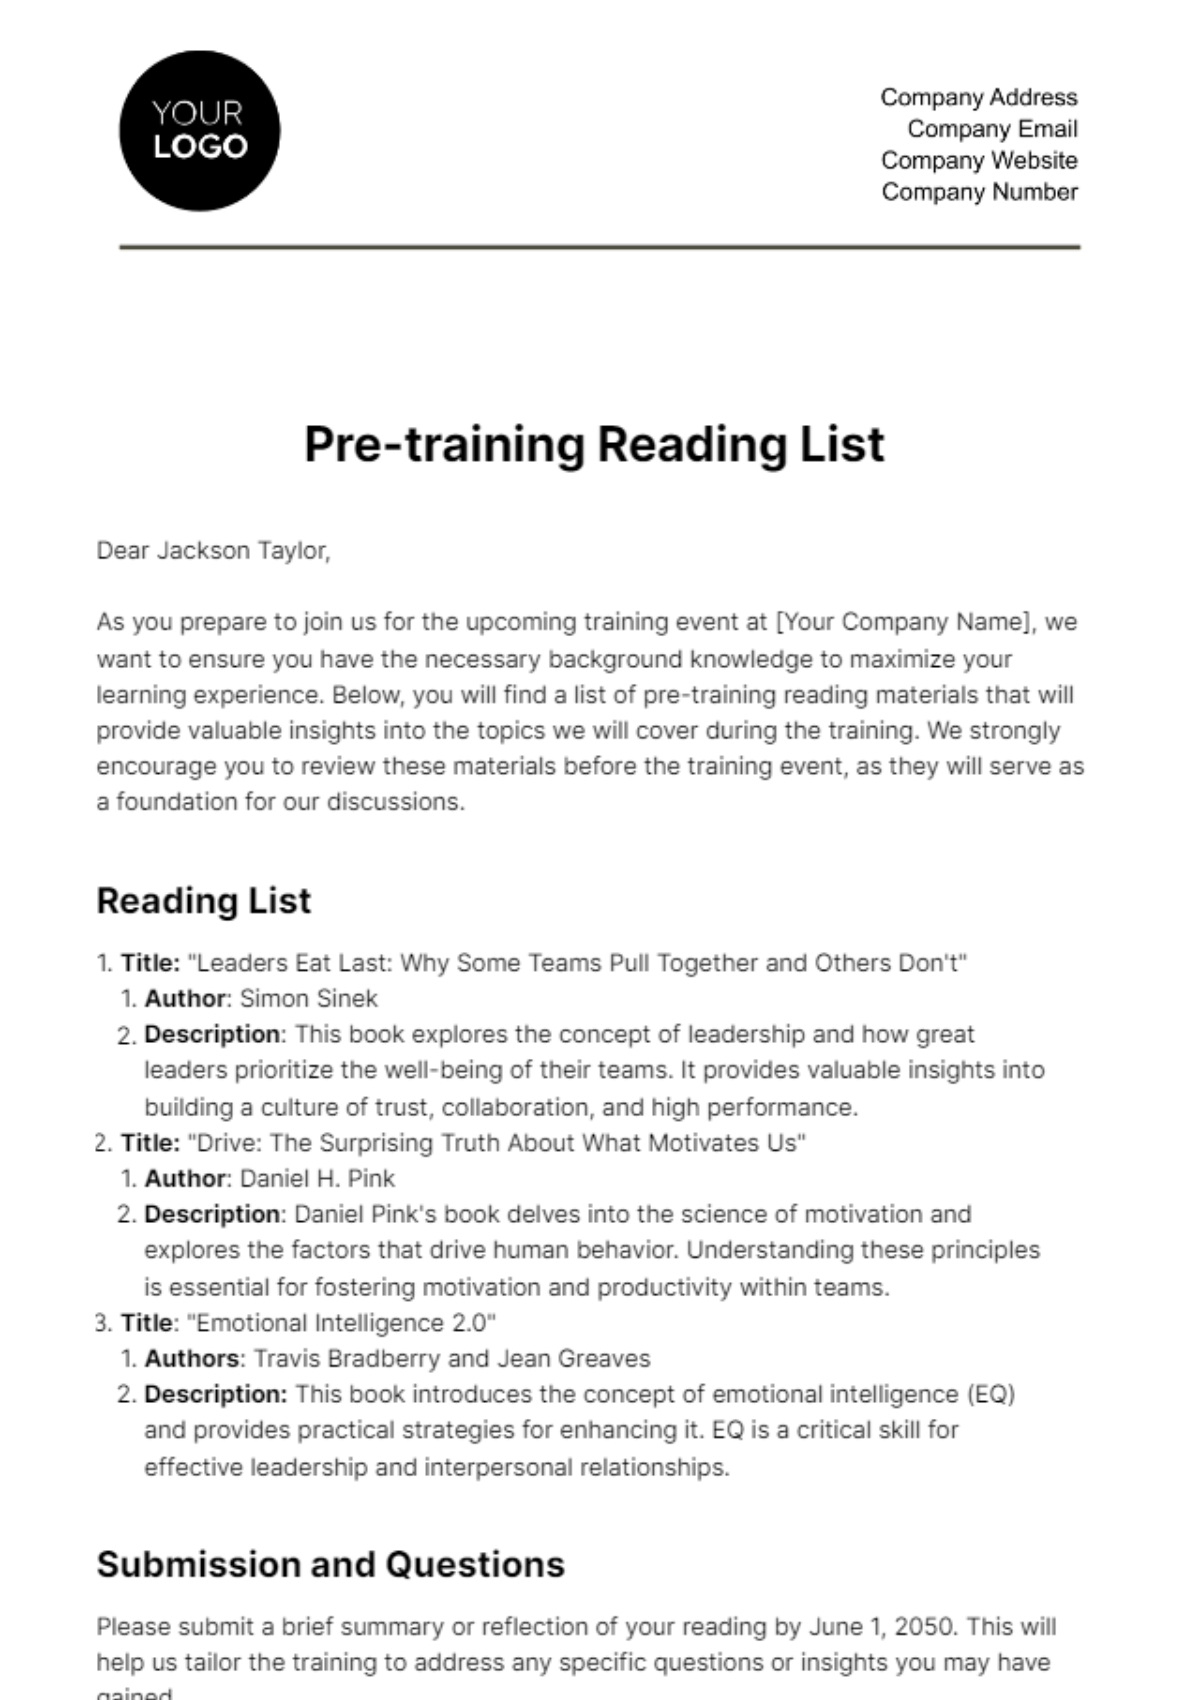 Pre-training Reading List HR Template